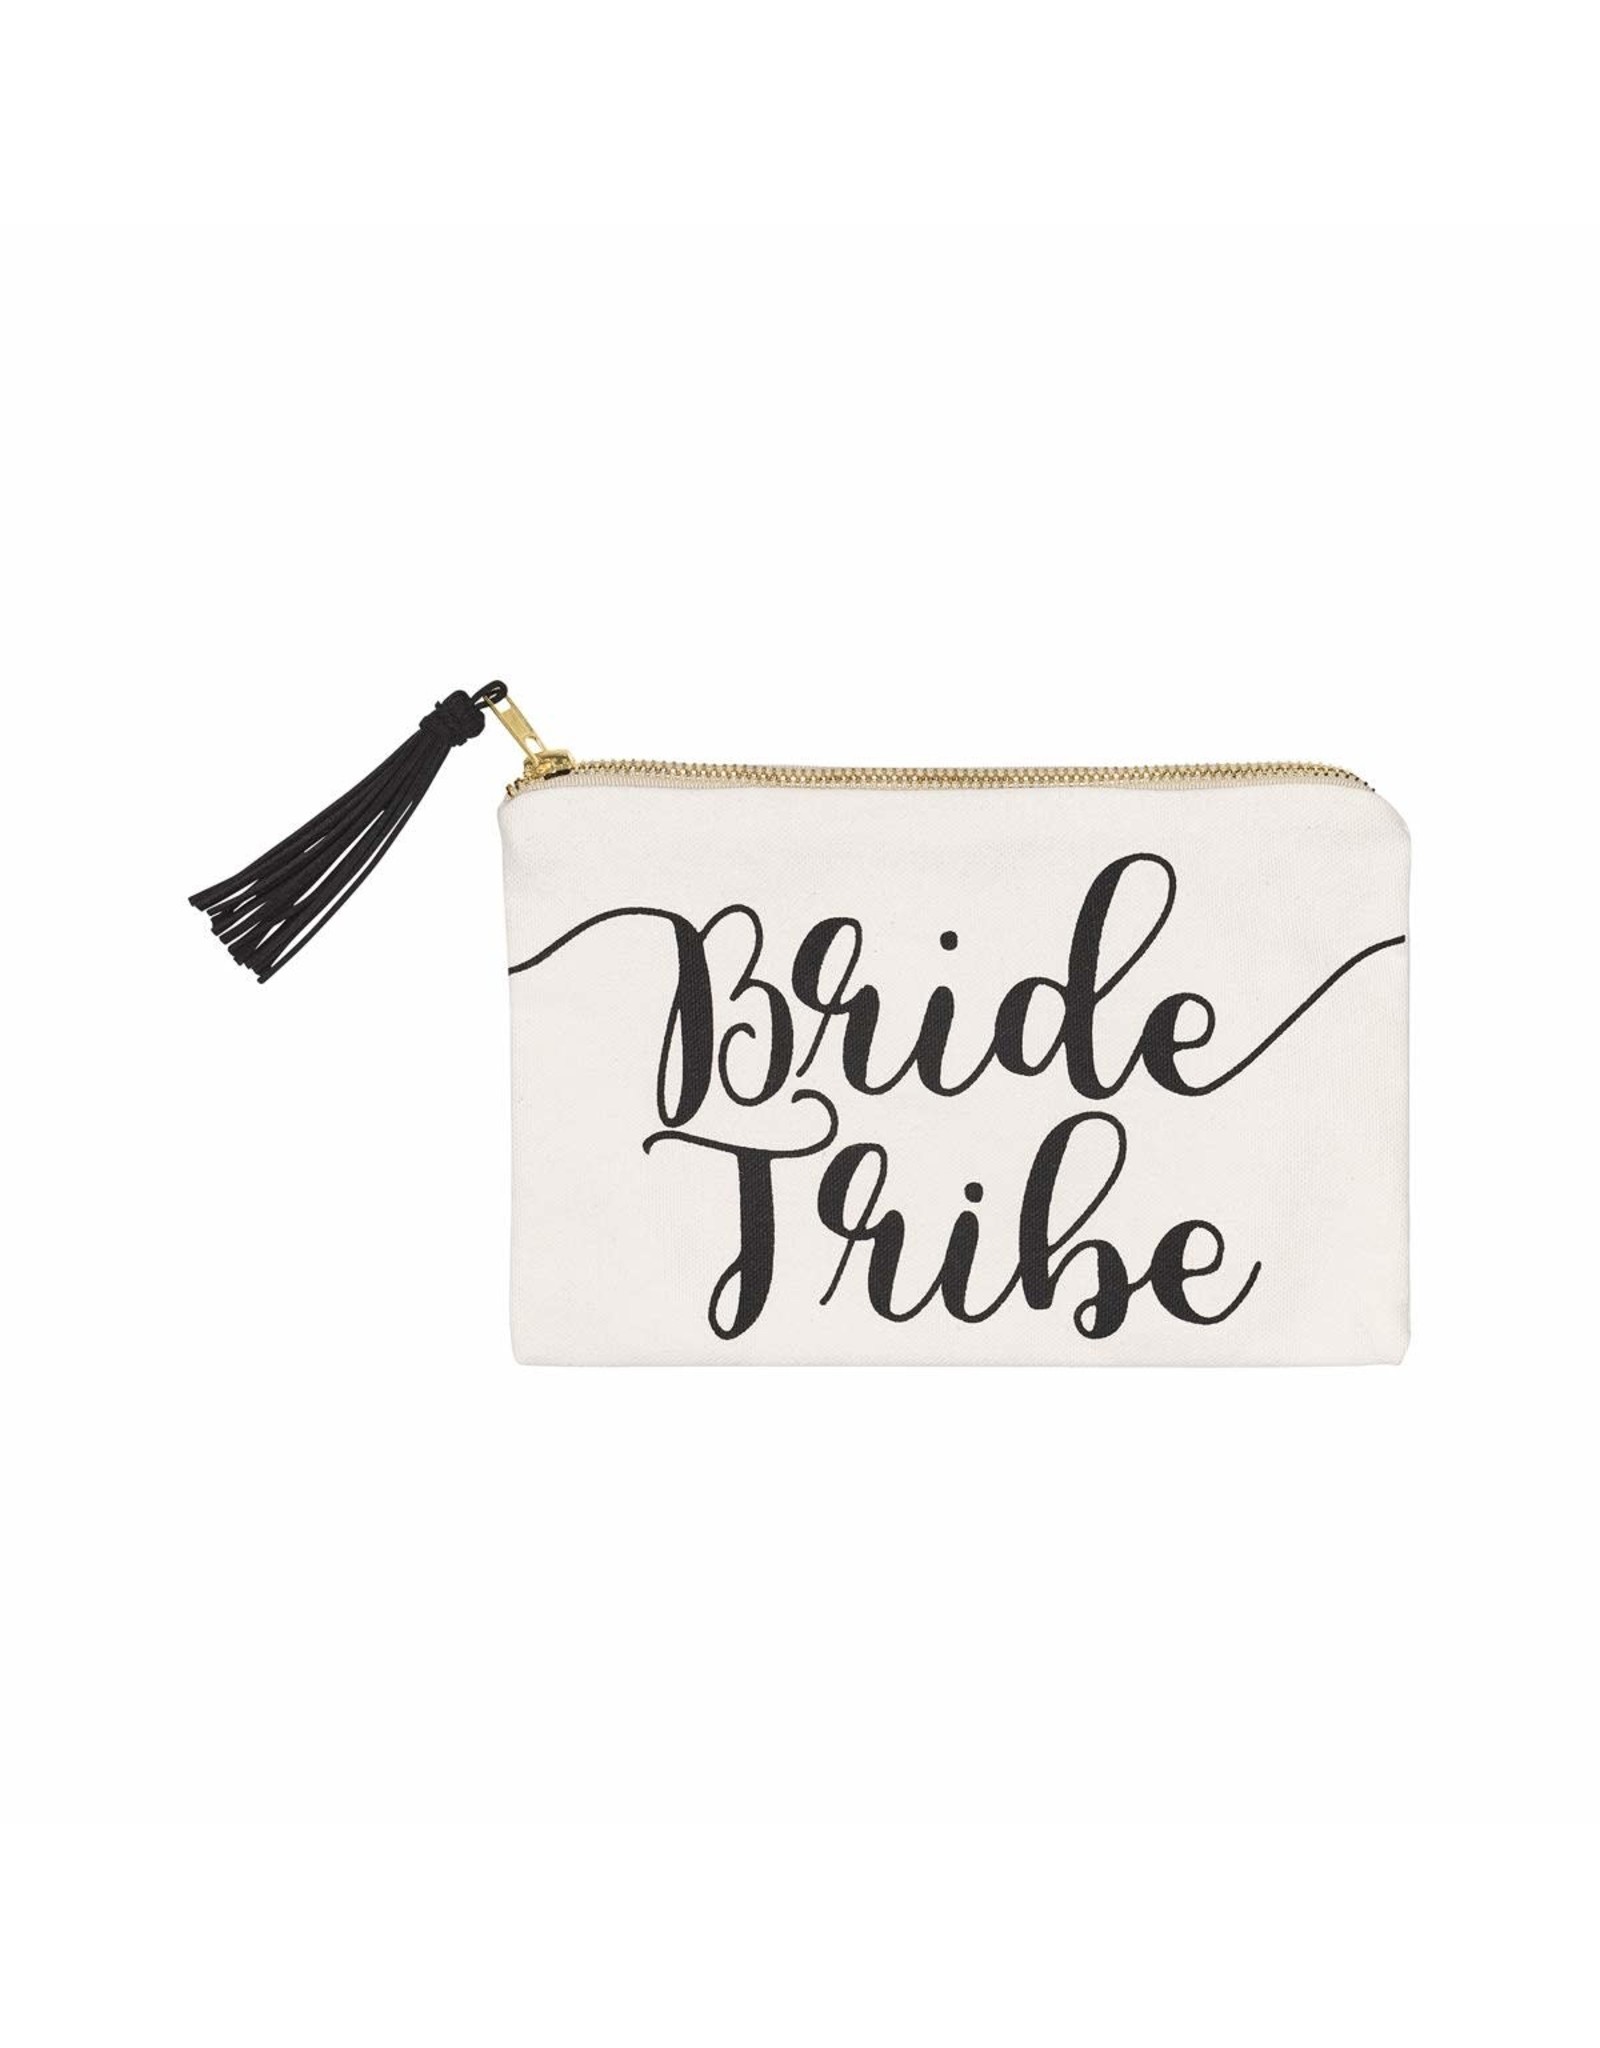 Collins Bride Tribe Cosmetic Bag